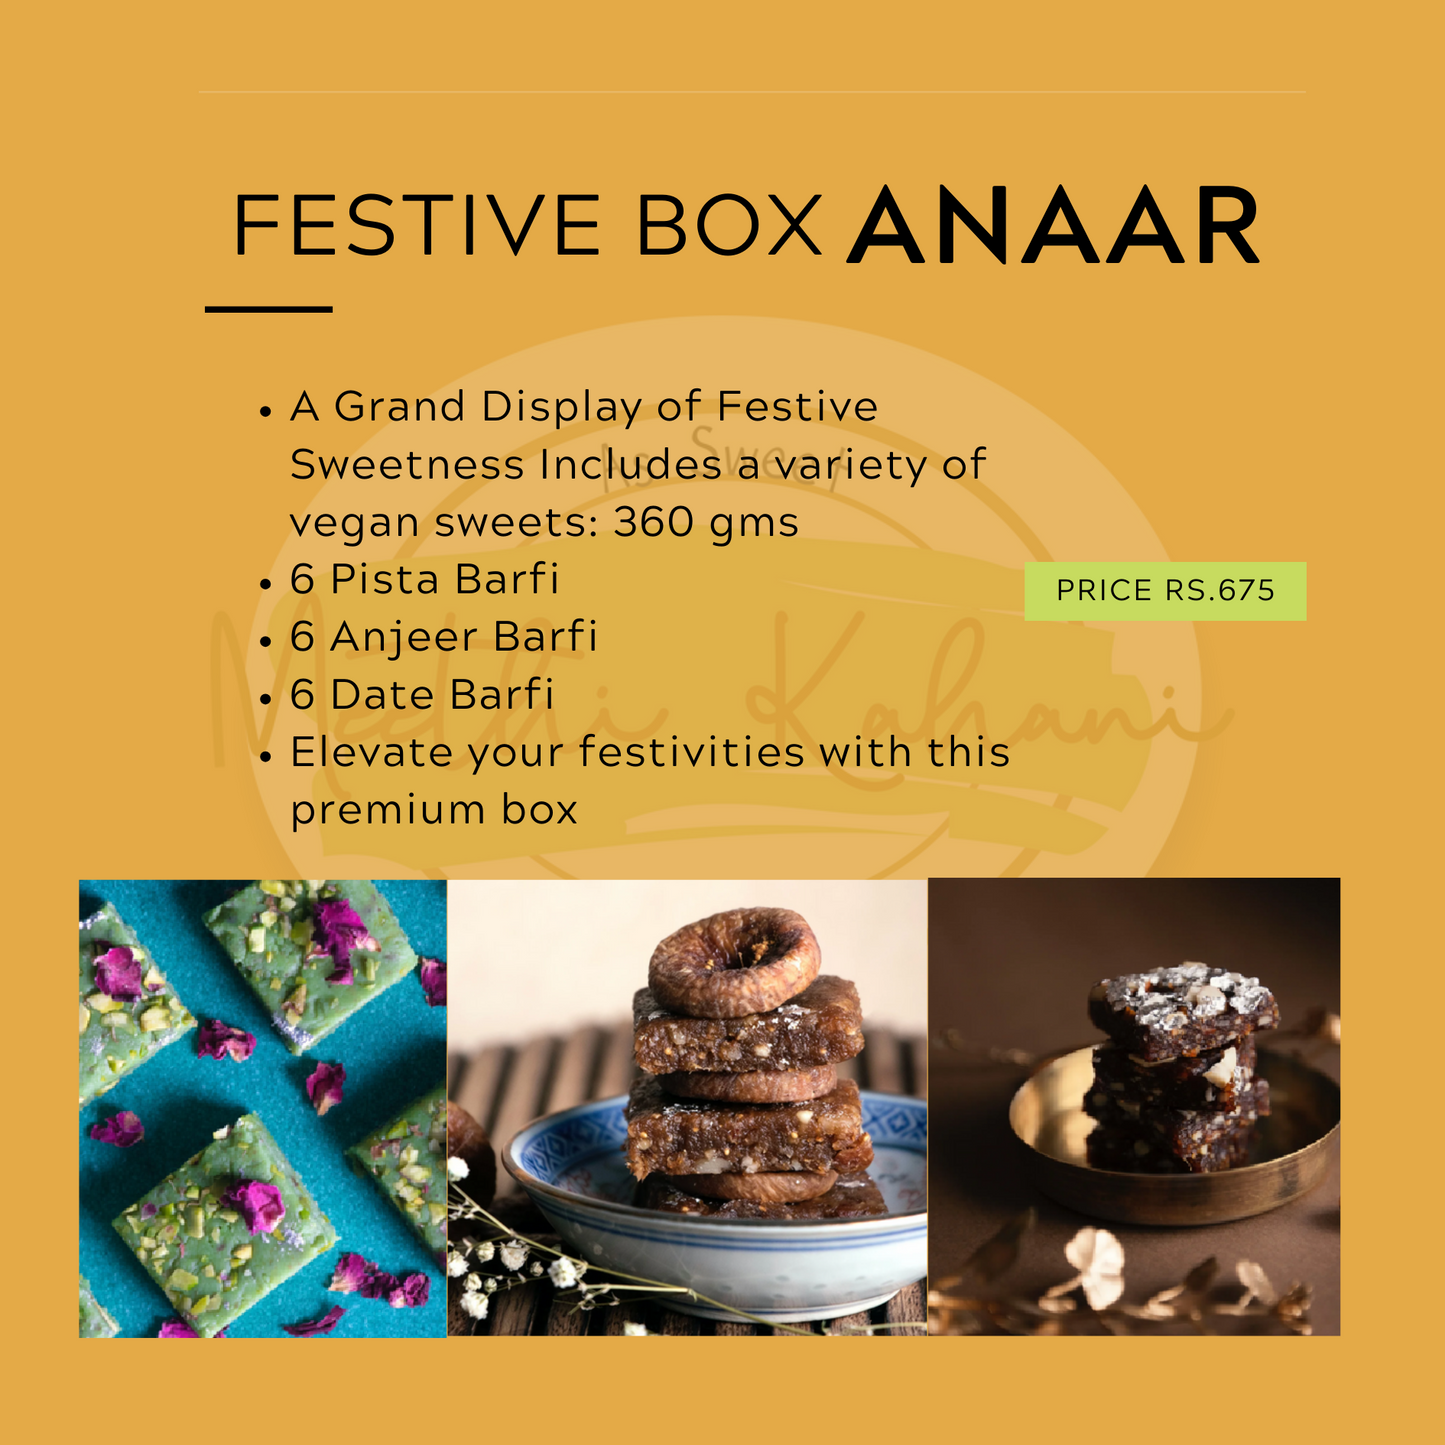 Festive Gift Box "Anar"